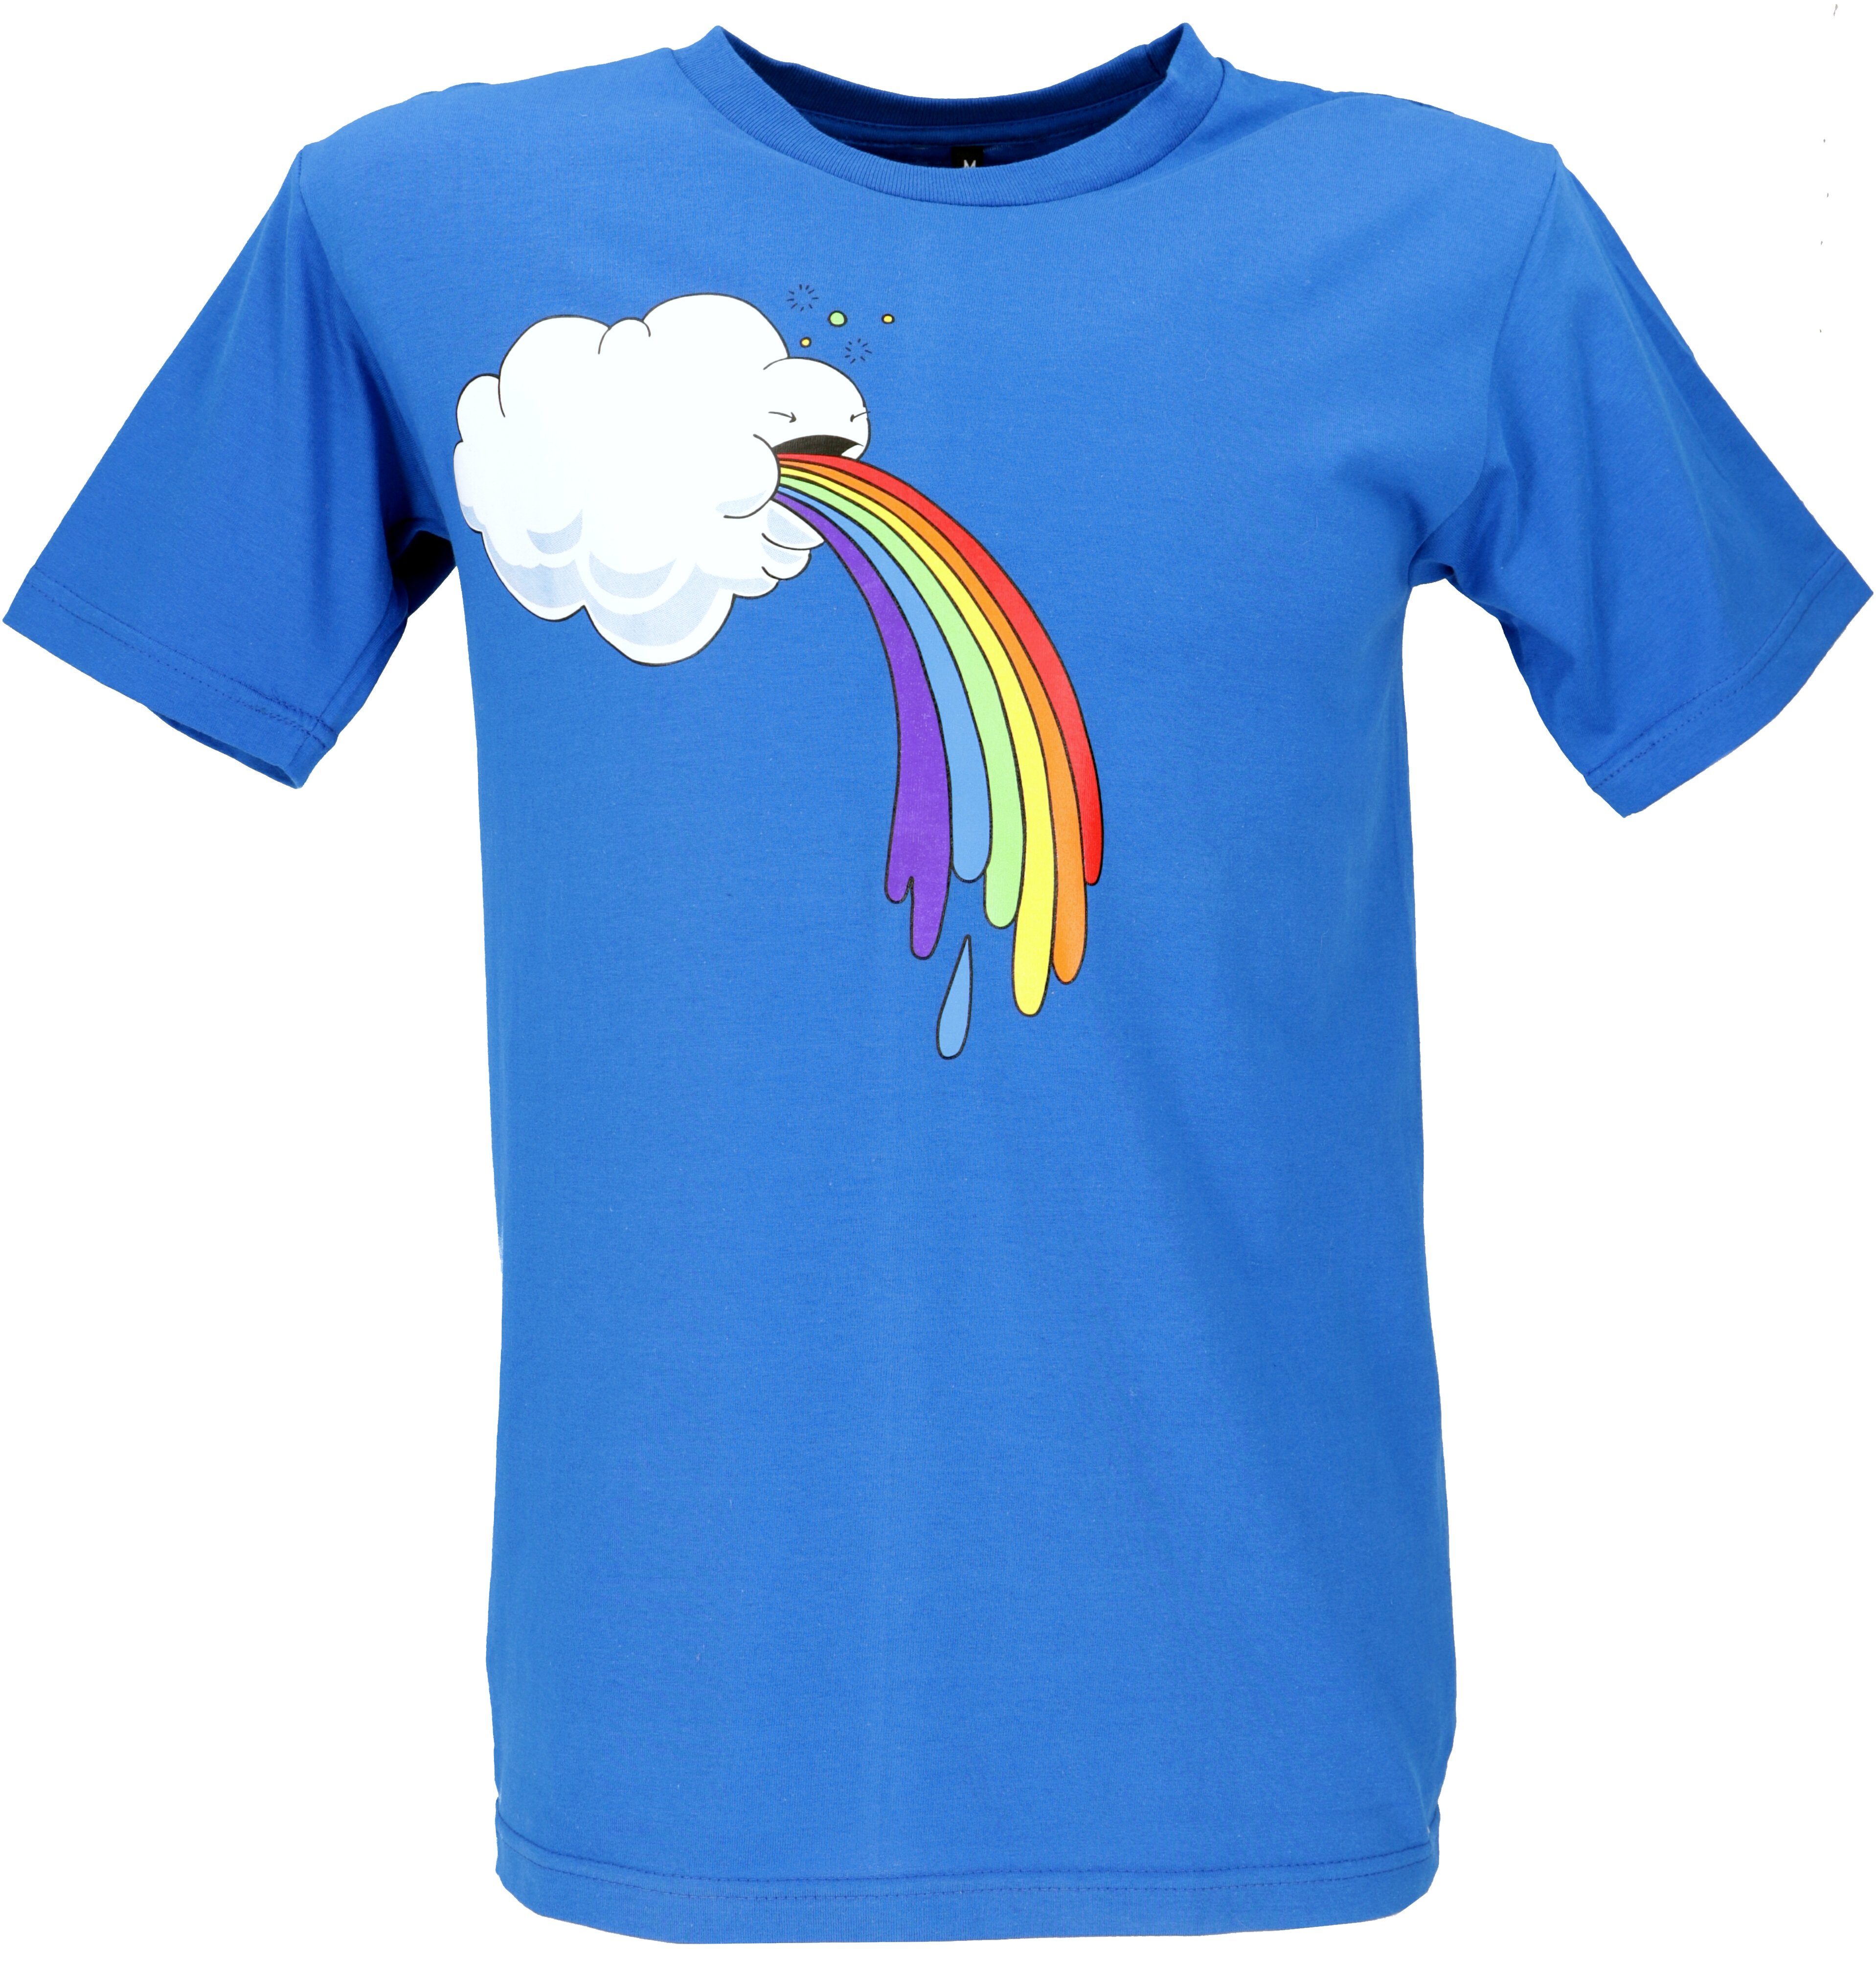 Guru-Shop T-Shirt Fun Retro blau alternative T-Shirt Art - Bekleidung `Wolke`